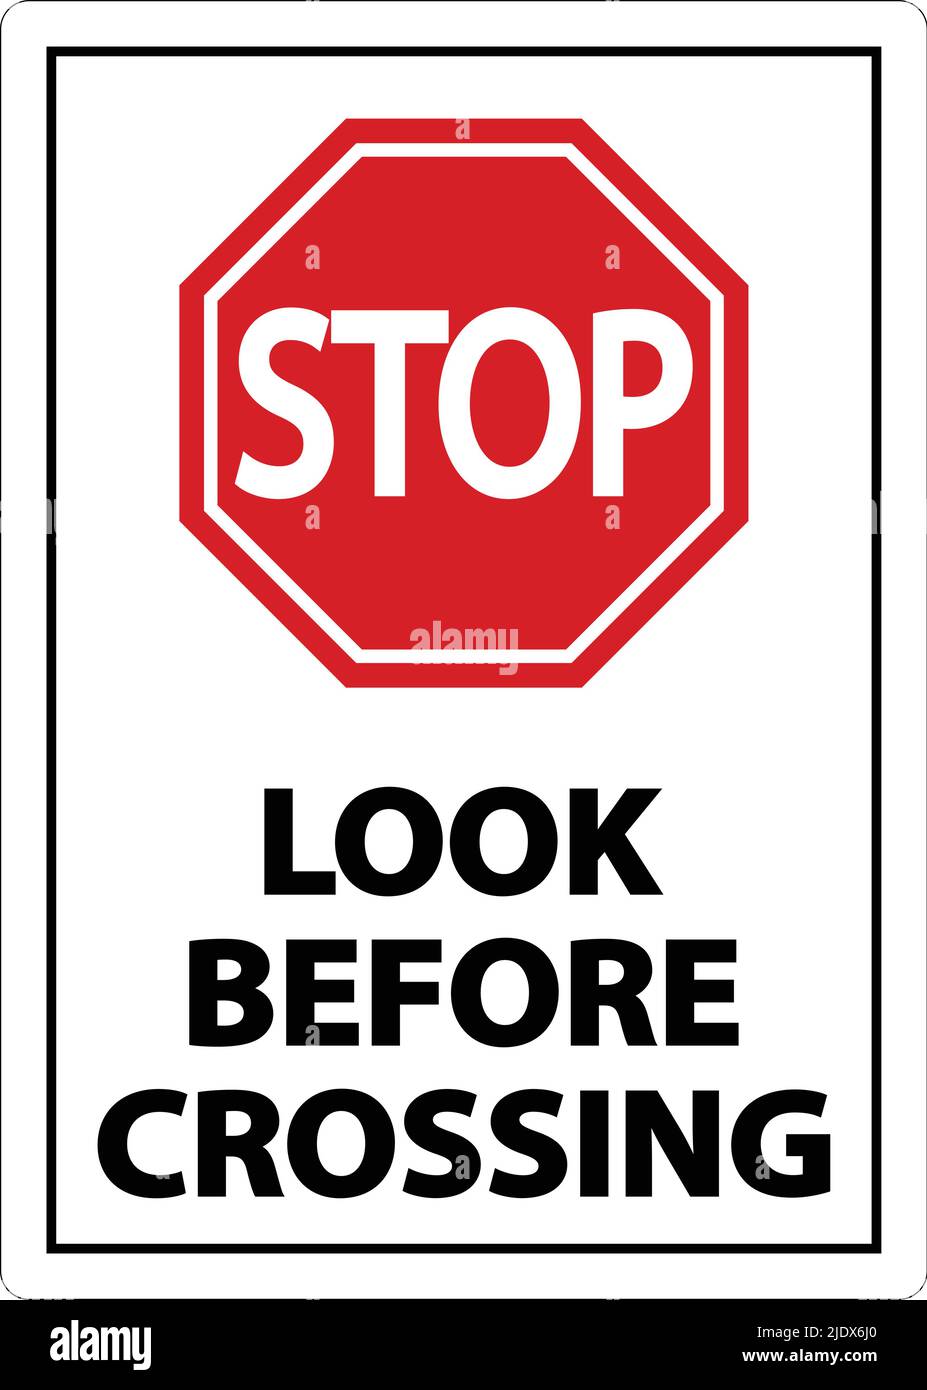 2-Way Stop Look Before Crossing Sign - Get 10% Off Now